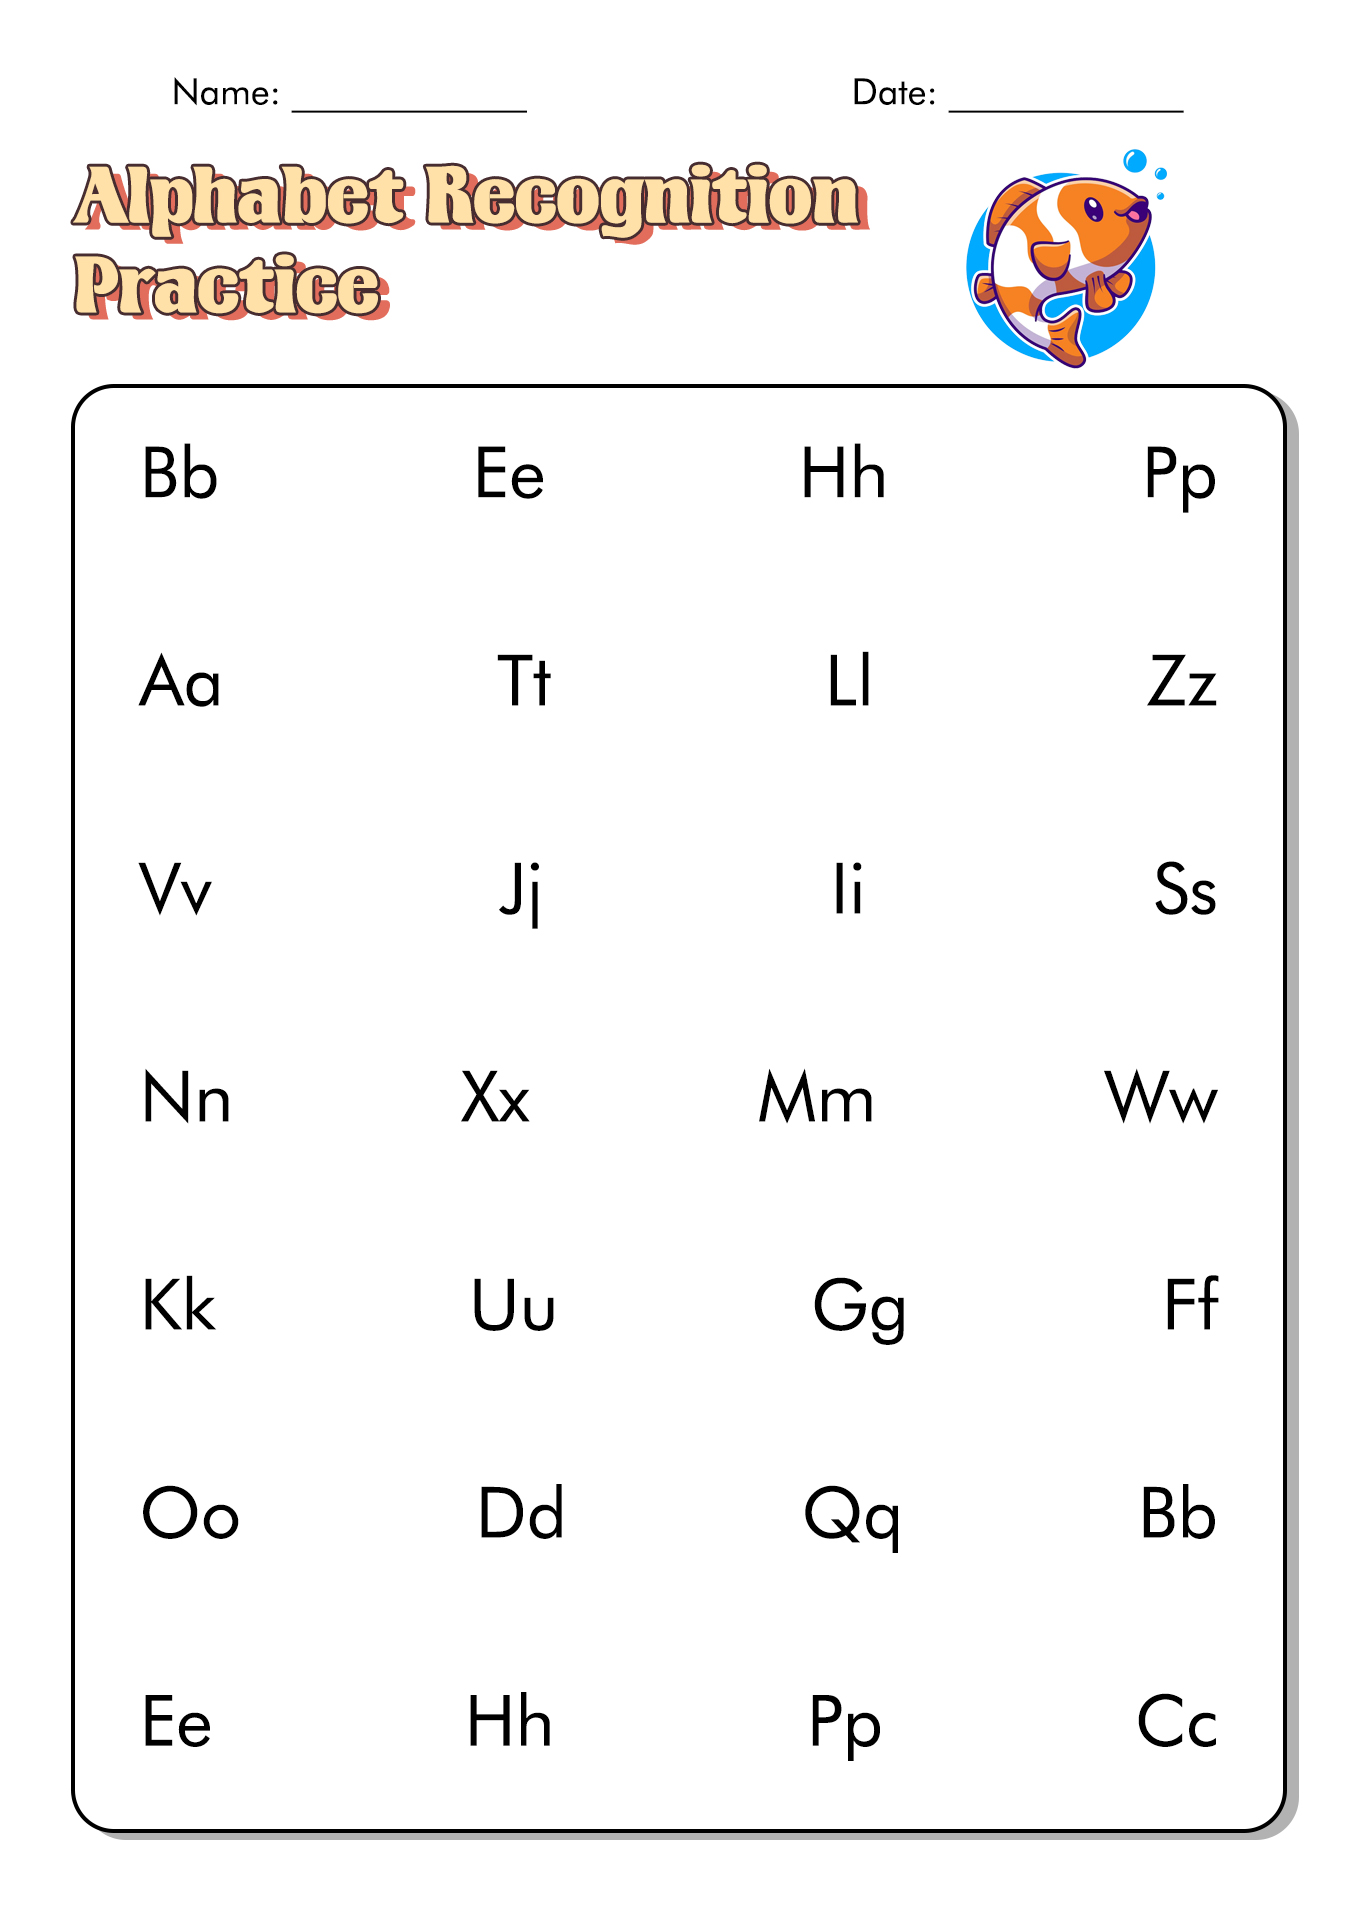 Alphabet Letter Recognition Assessment Image